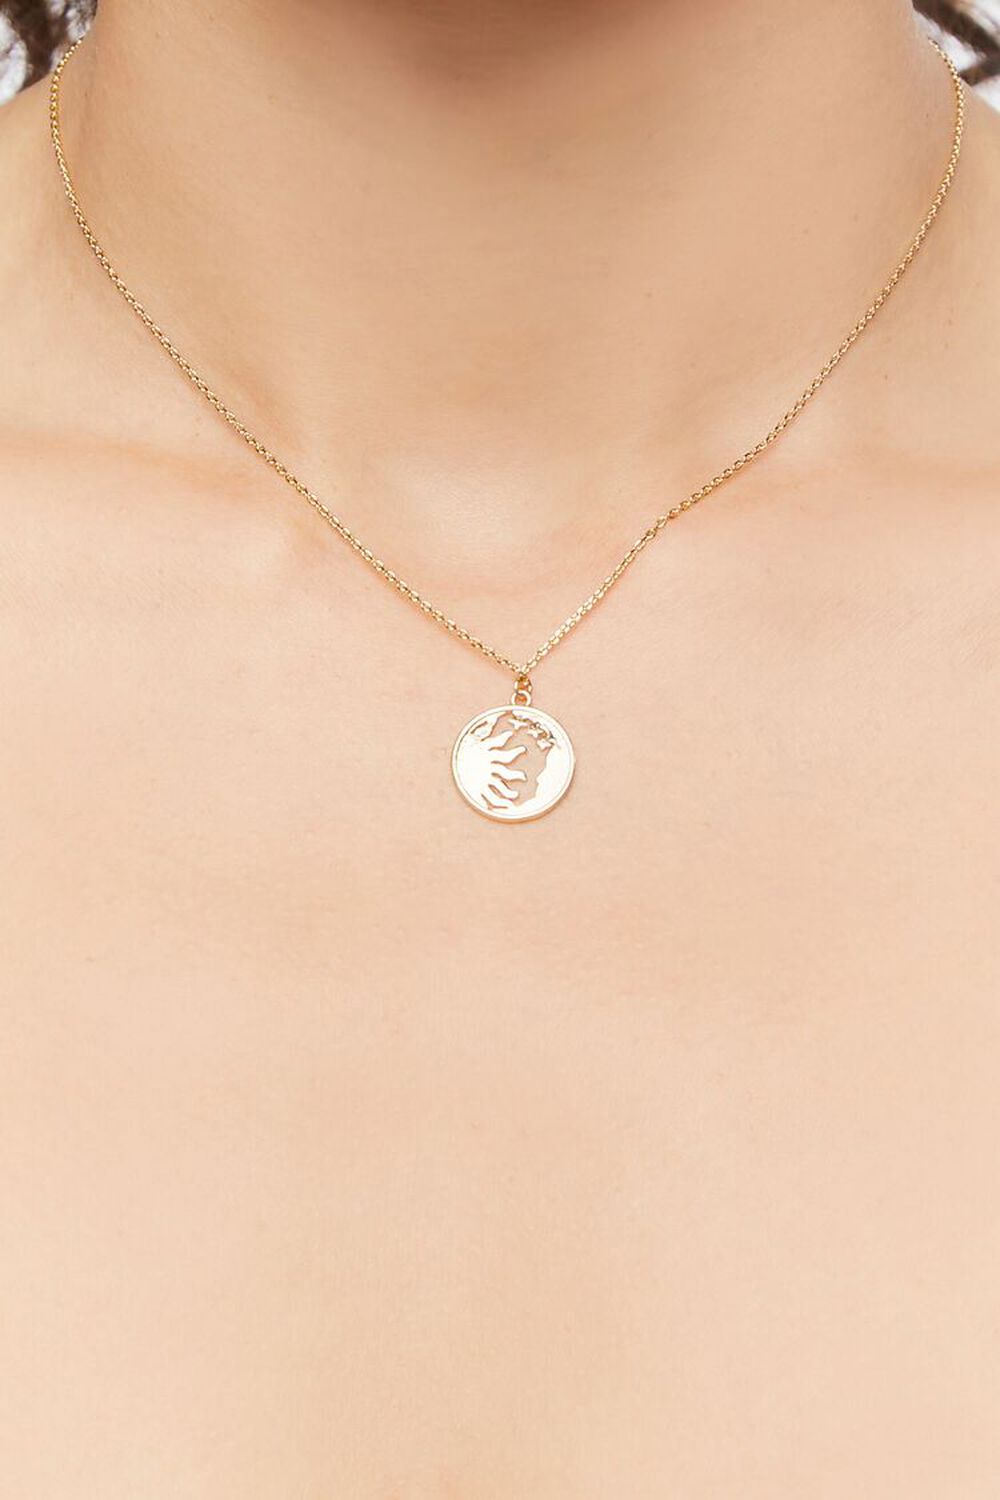 GOLD Sun & Moon Pendant Necklace, image 1